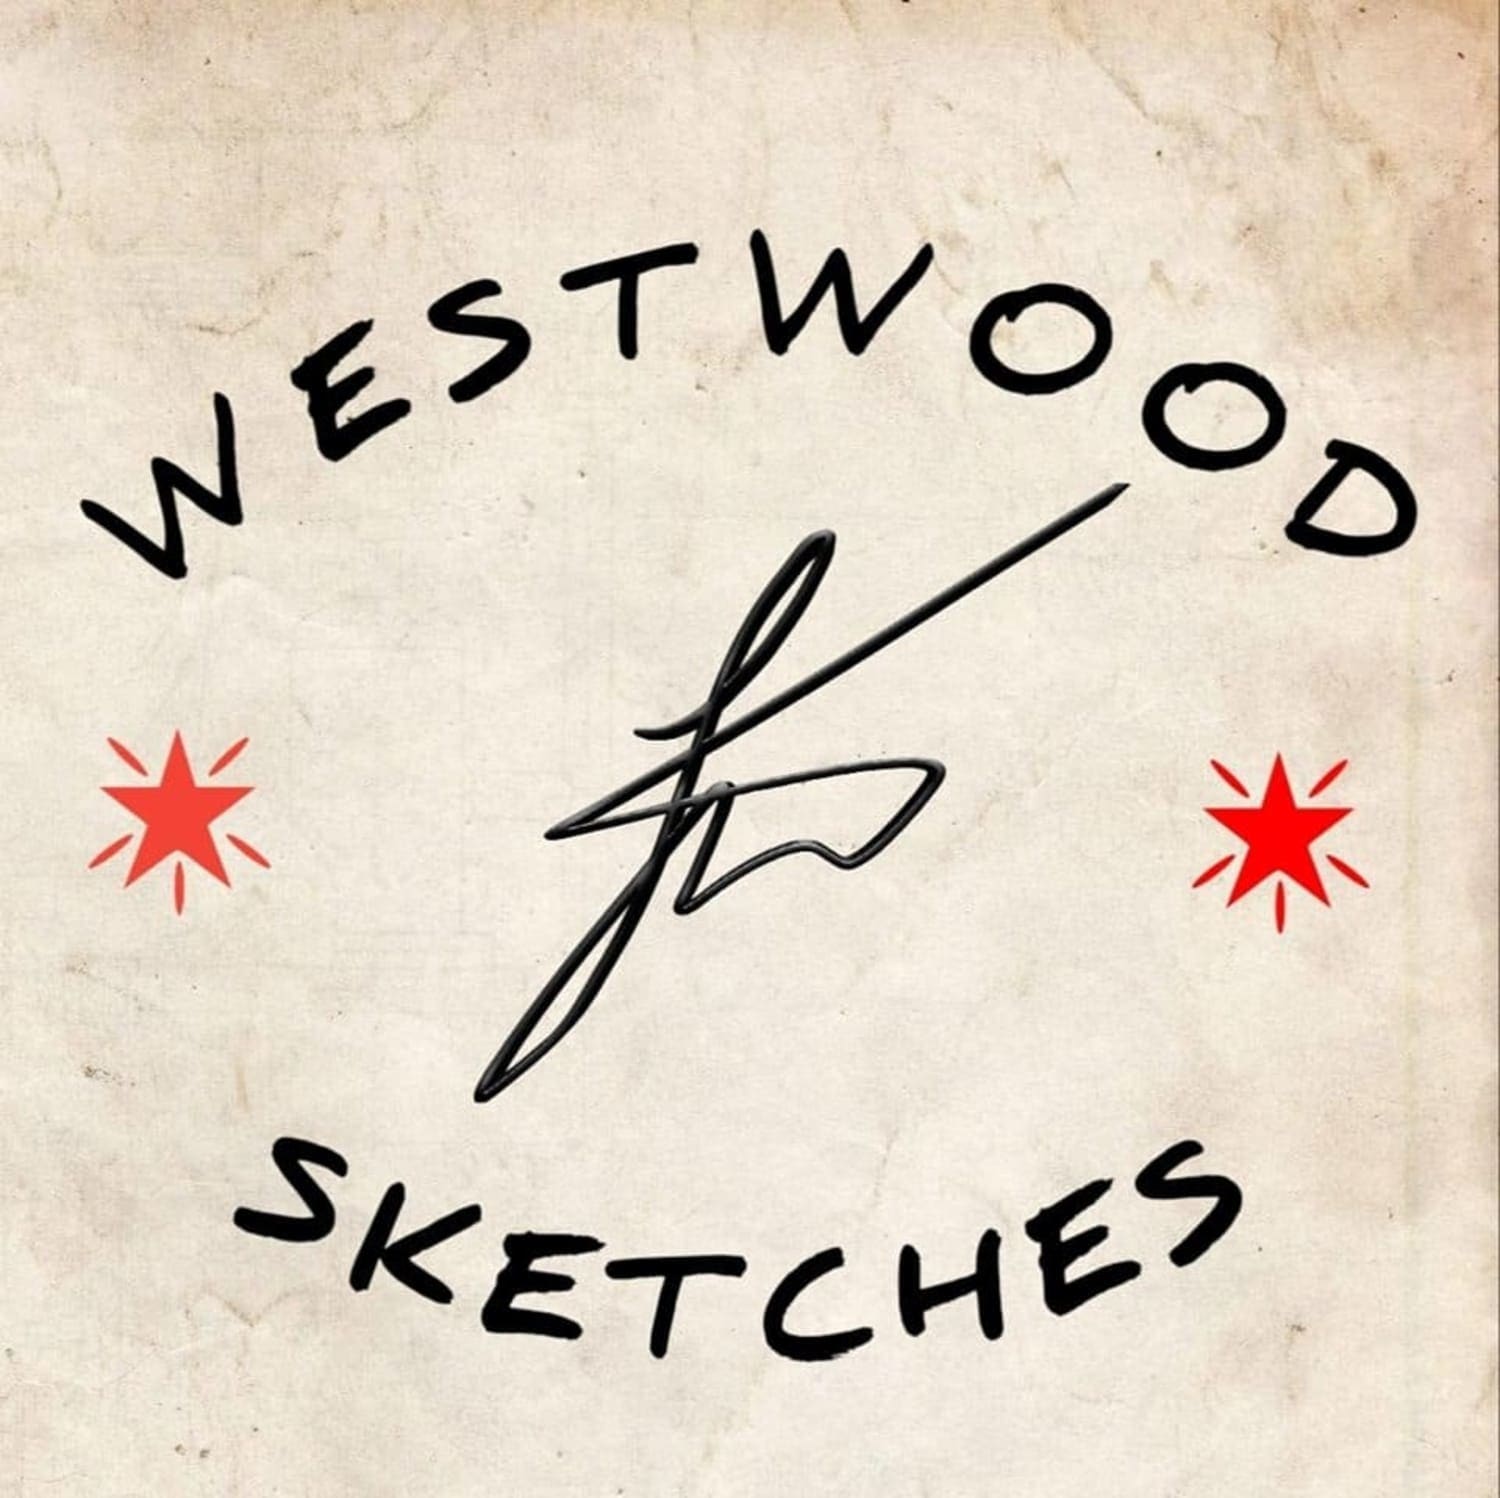 Westwood Sketches